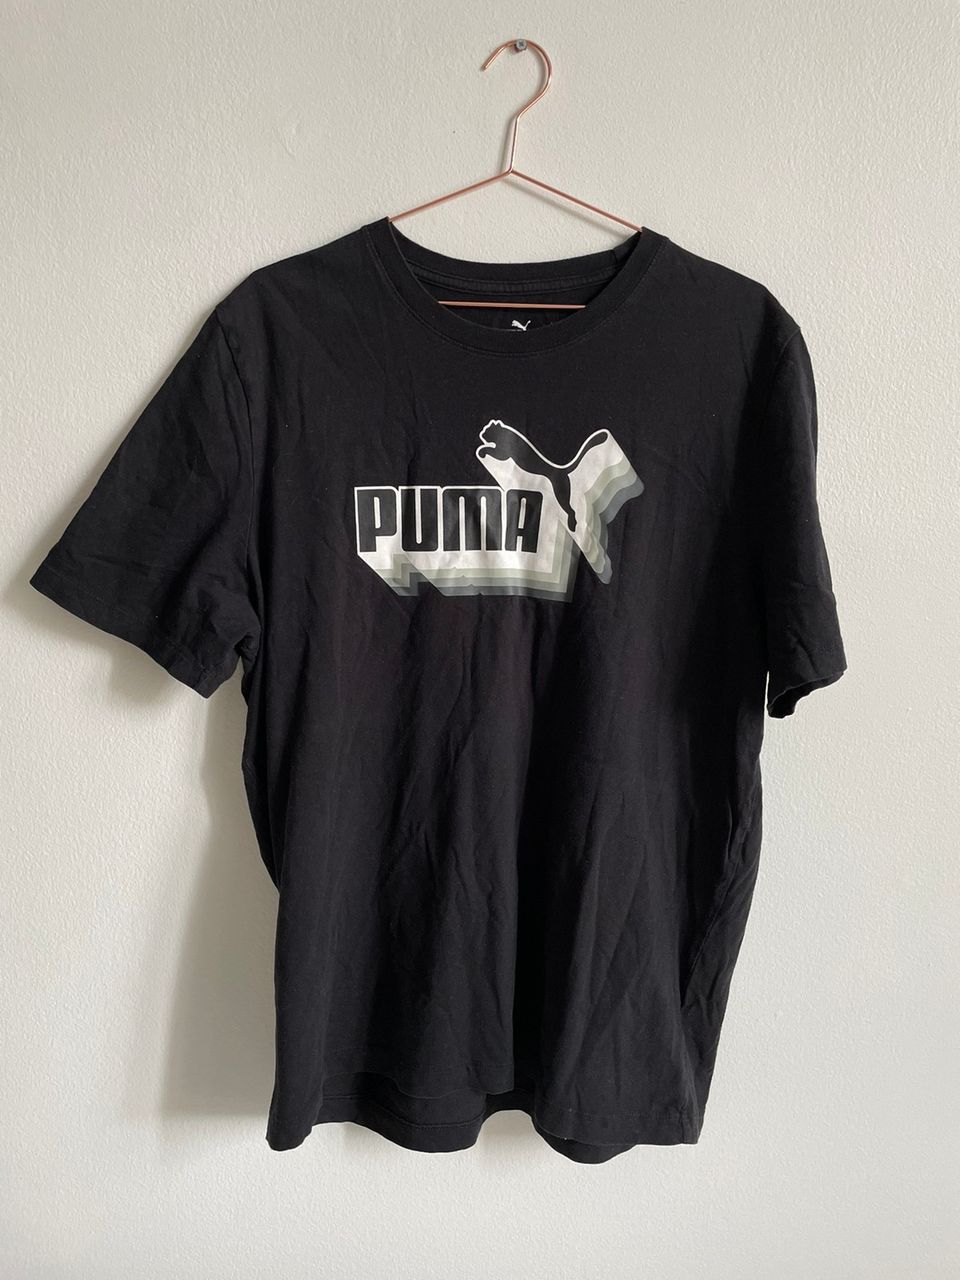 Puma T-paita, koko XL.